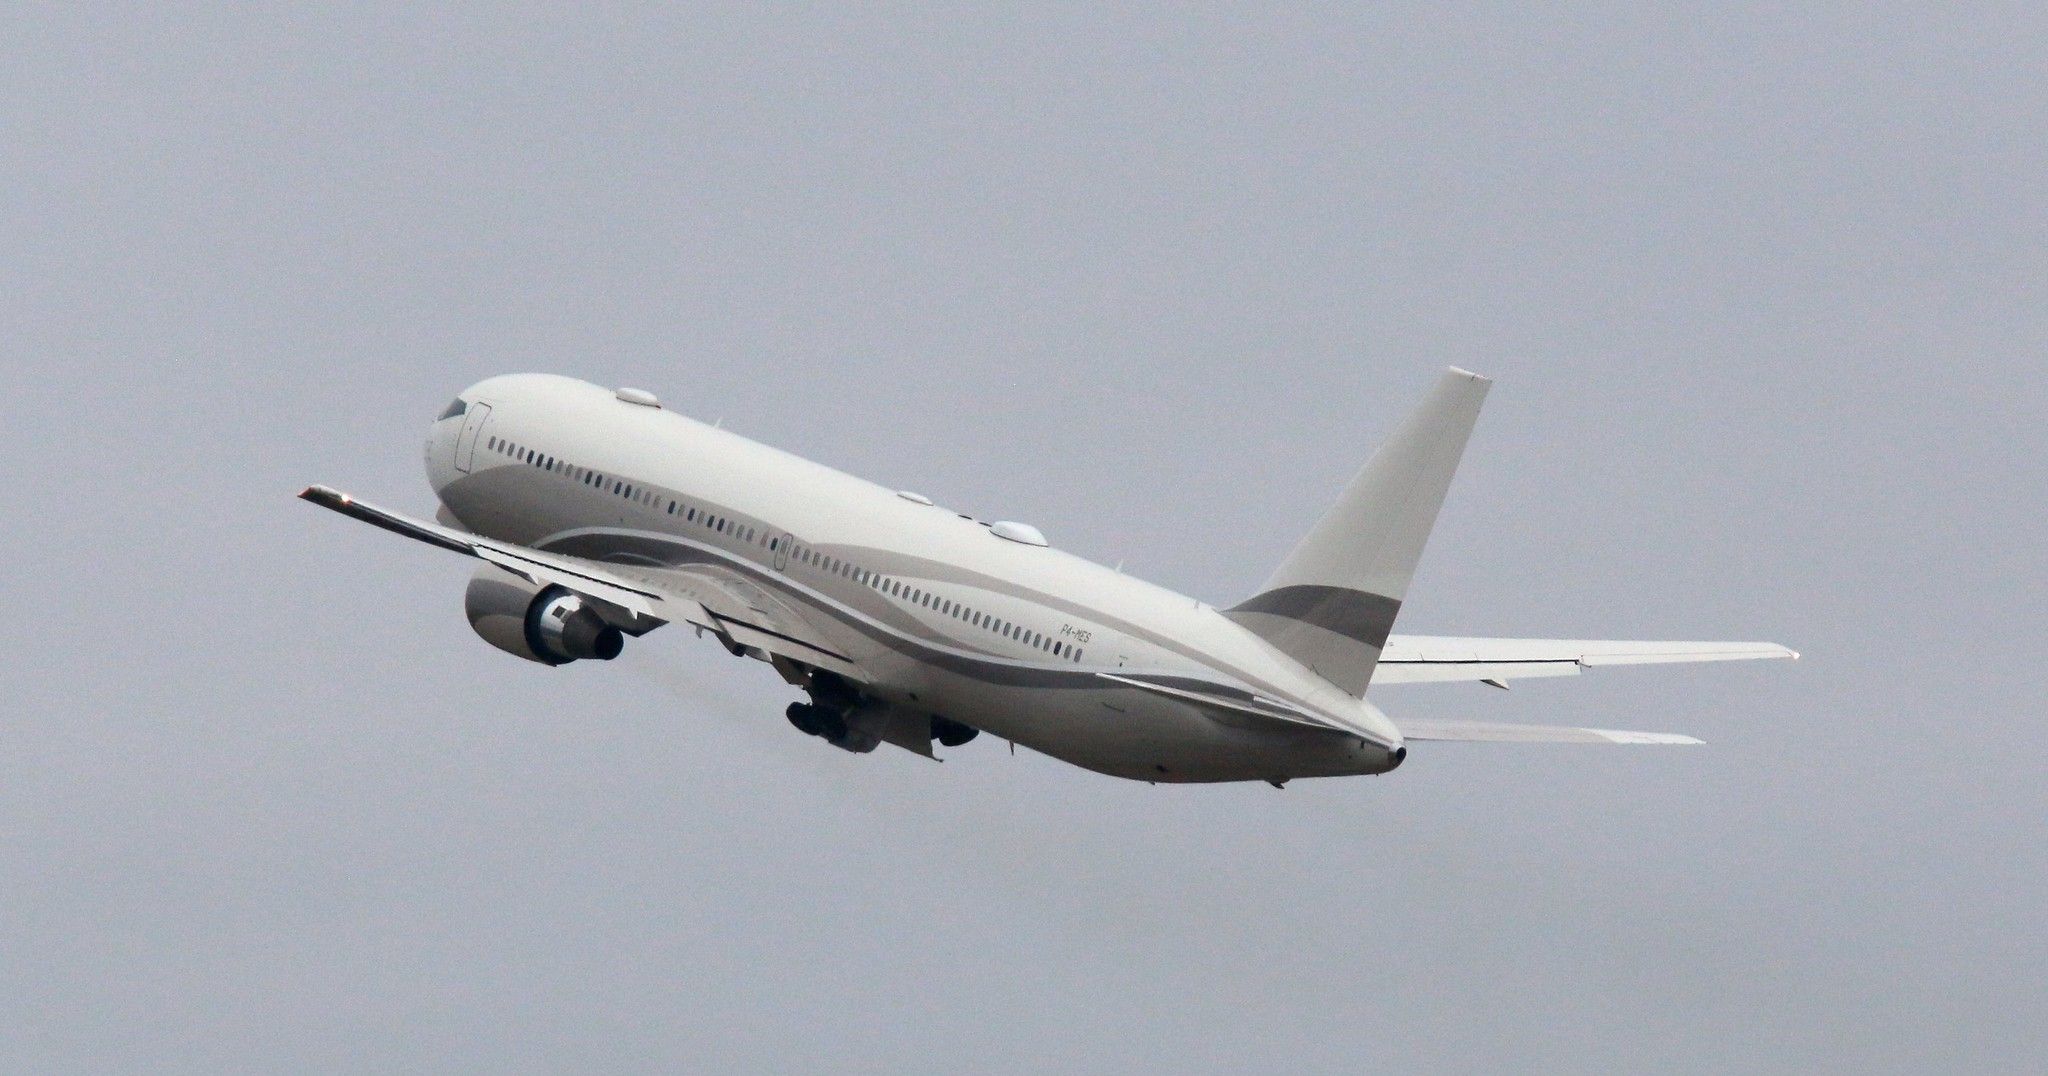 Roman-abramovich-jet-Boeing-767